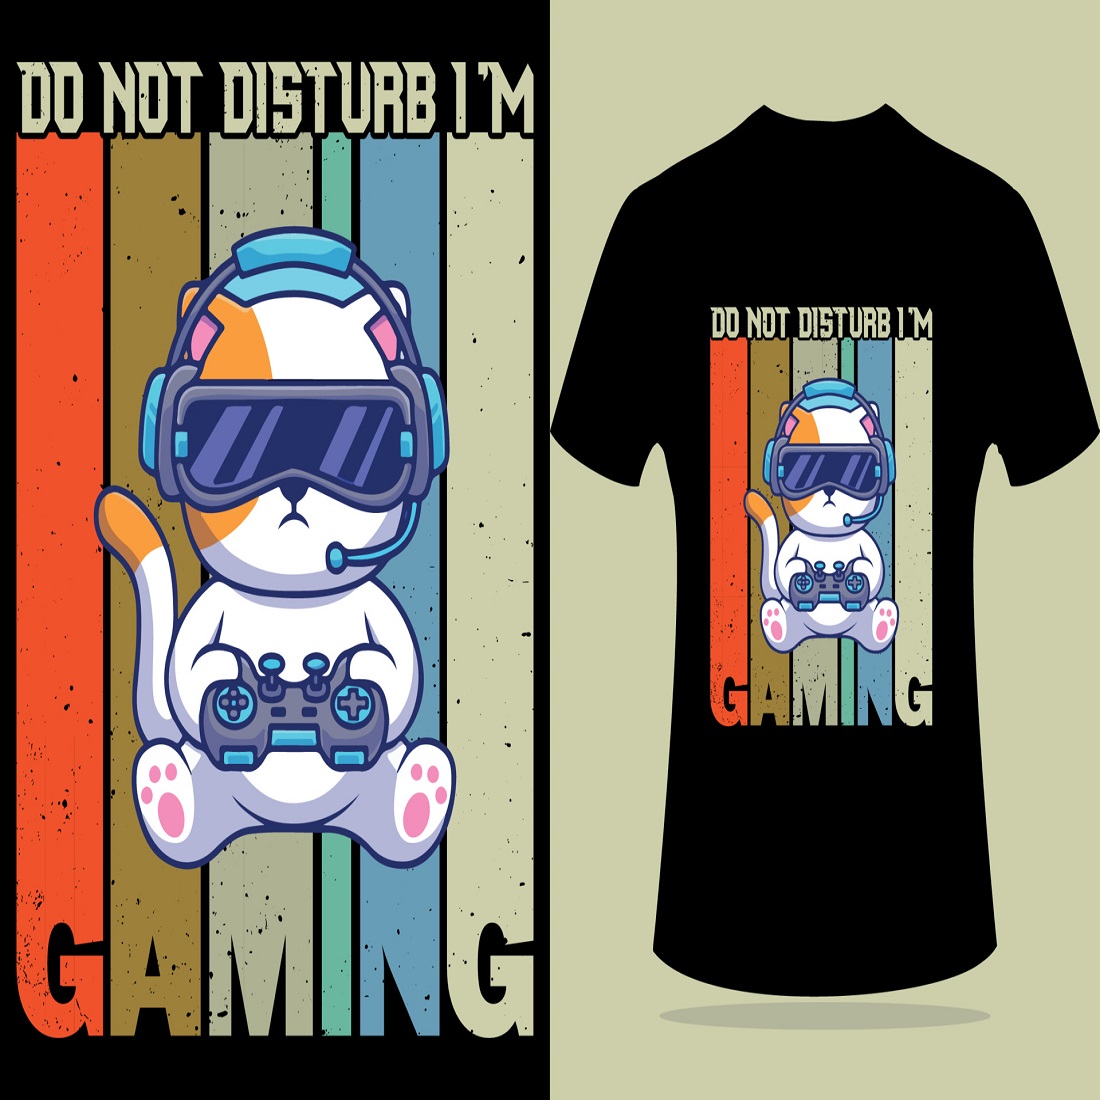 Do not disturb I'm gaming slogan retro vintage t-shirt preview image.